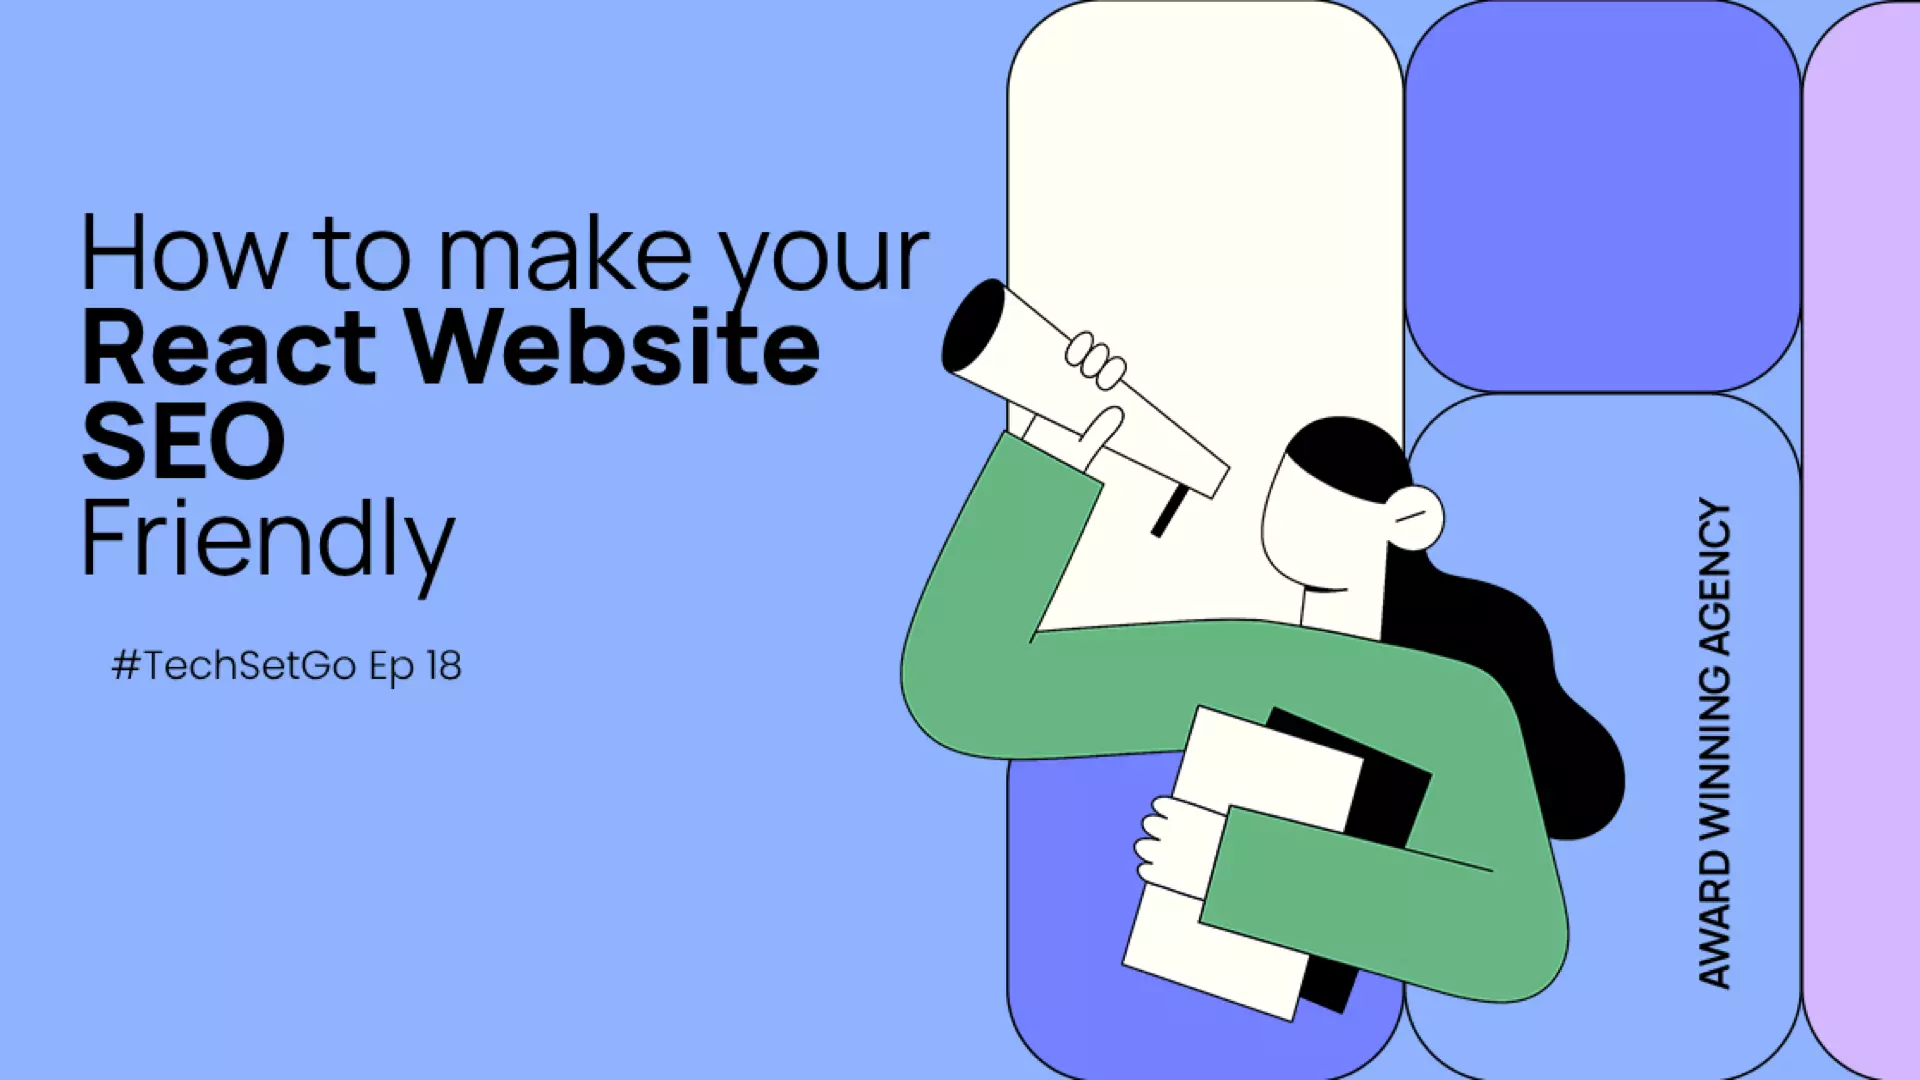 Make Your React Website SEO friendly